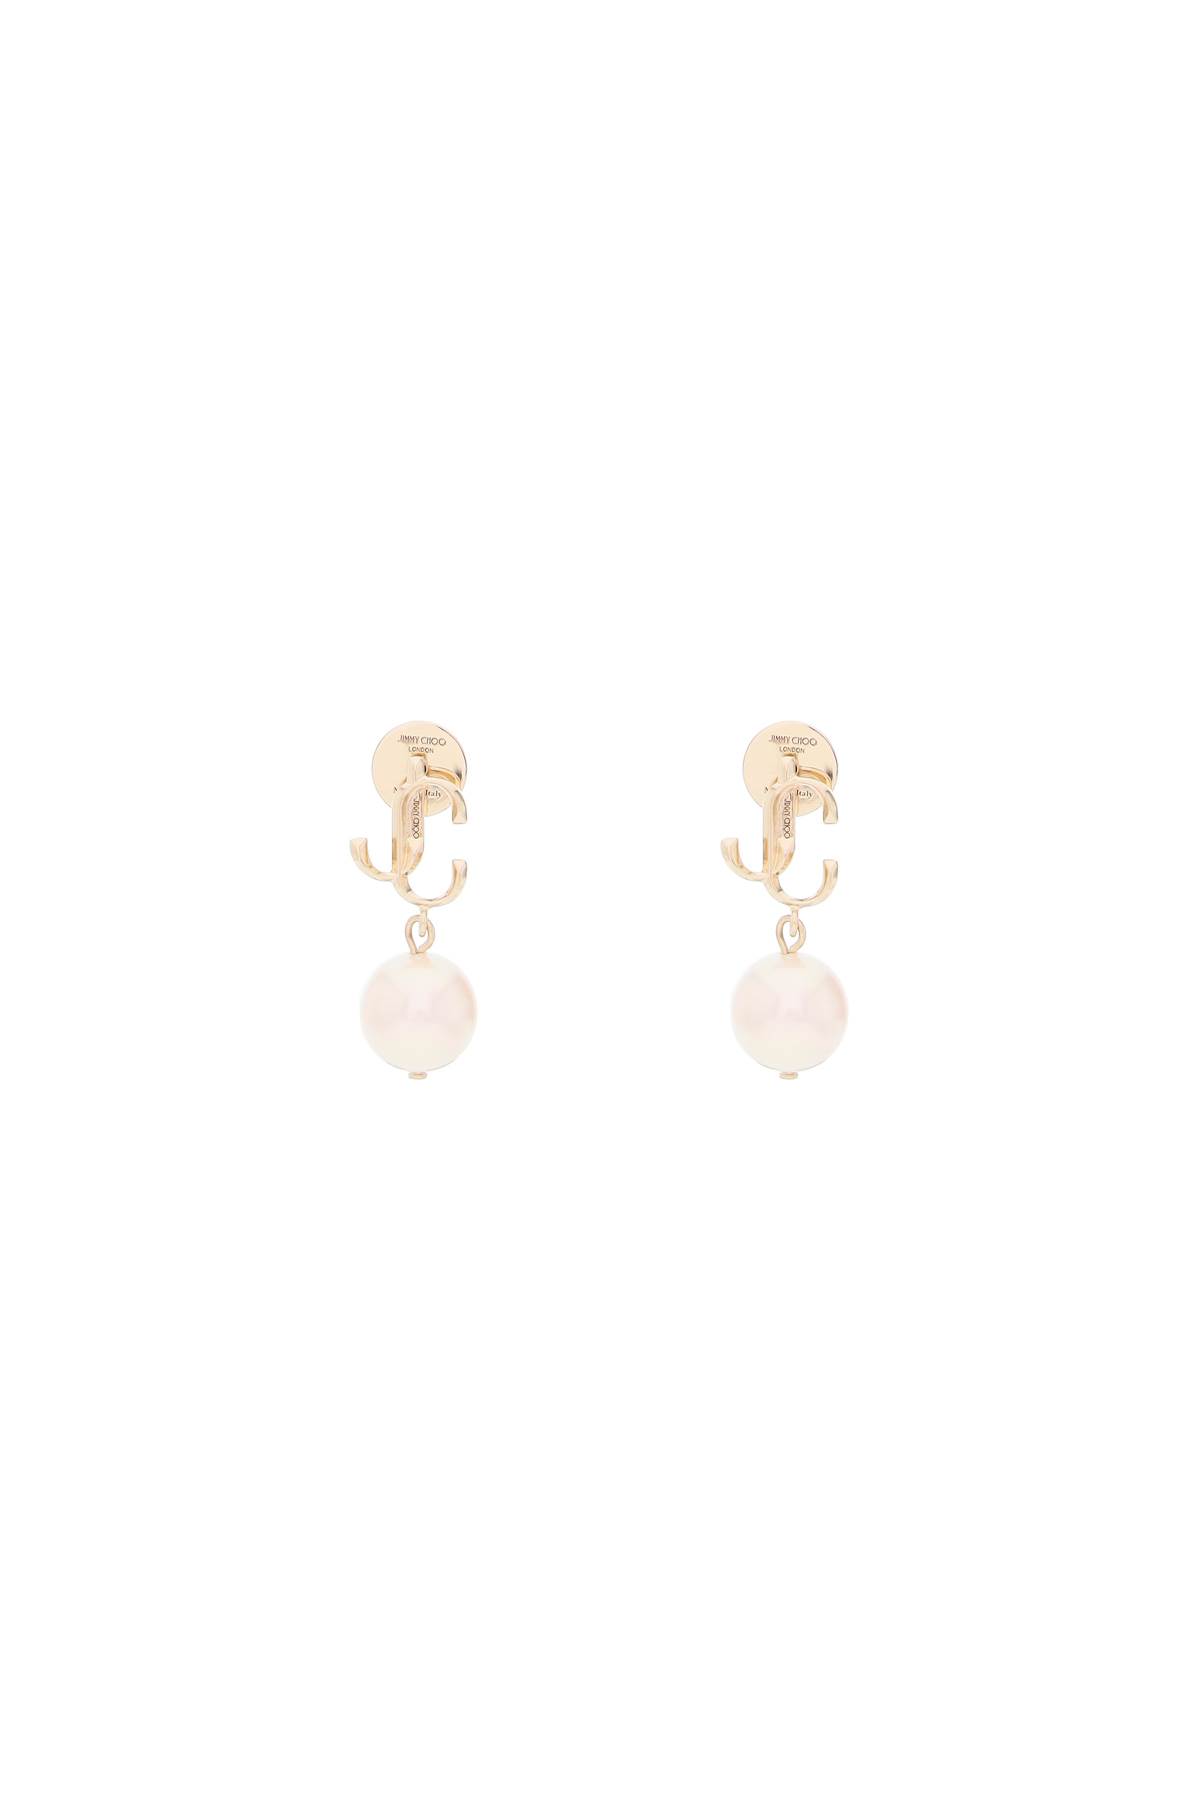 jc Pearl Earrings